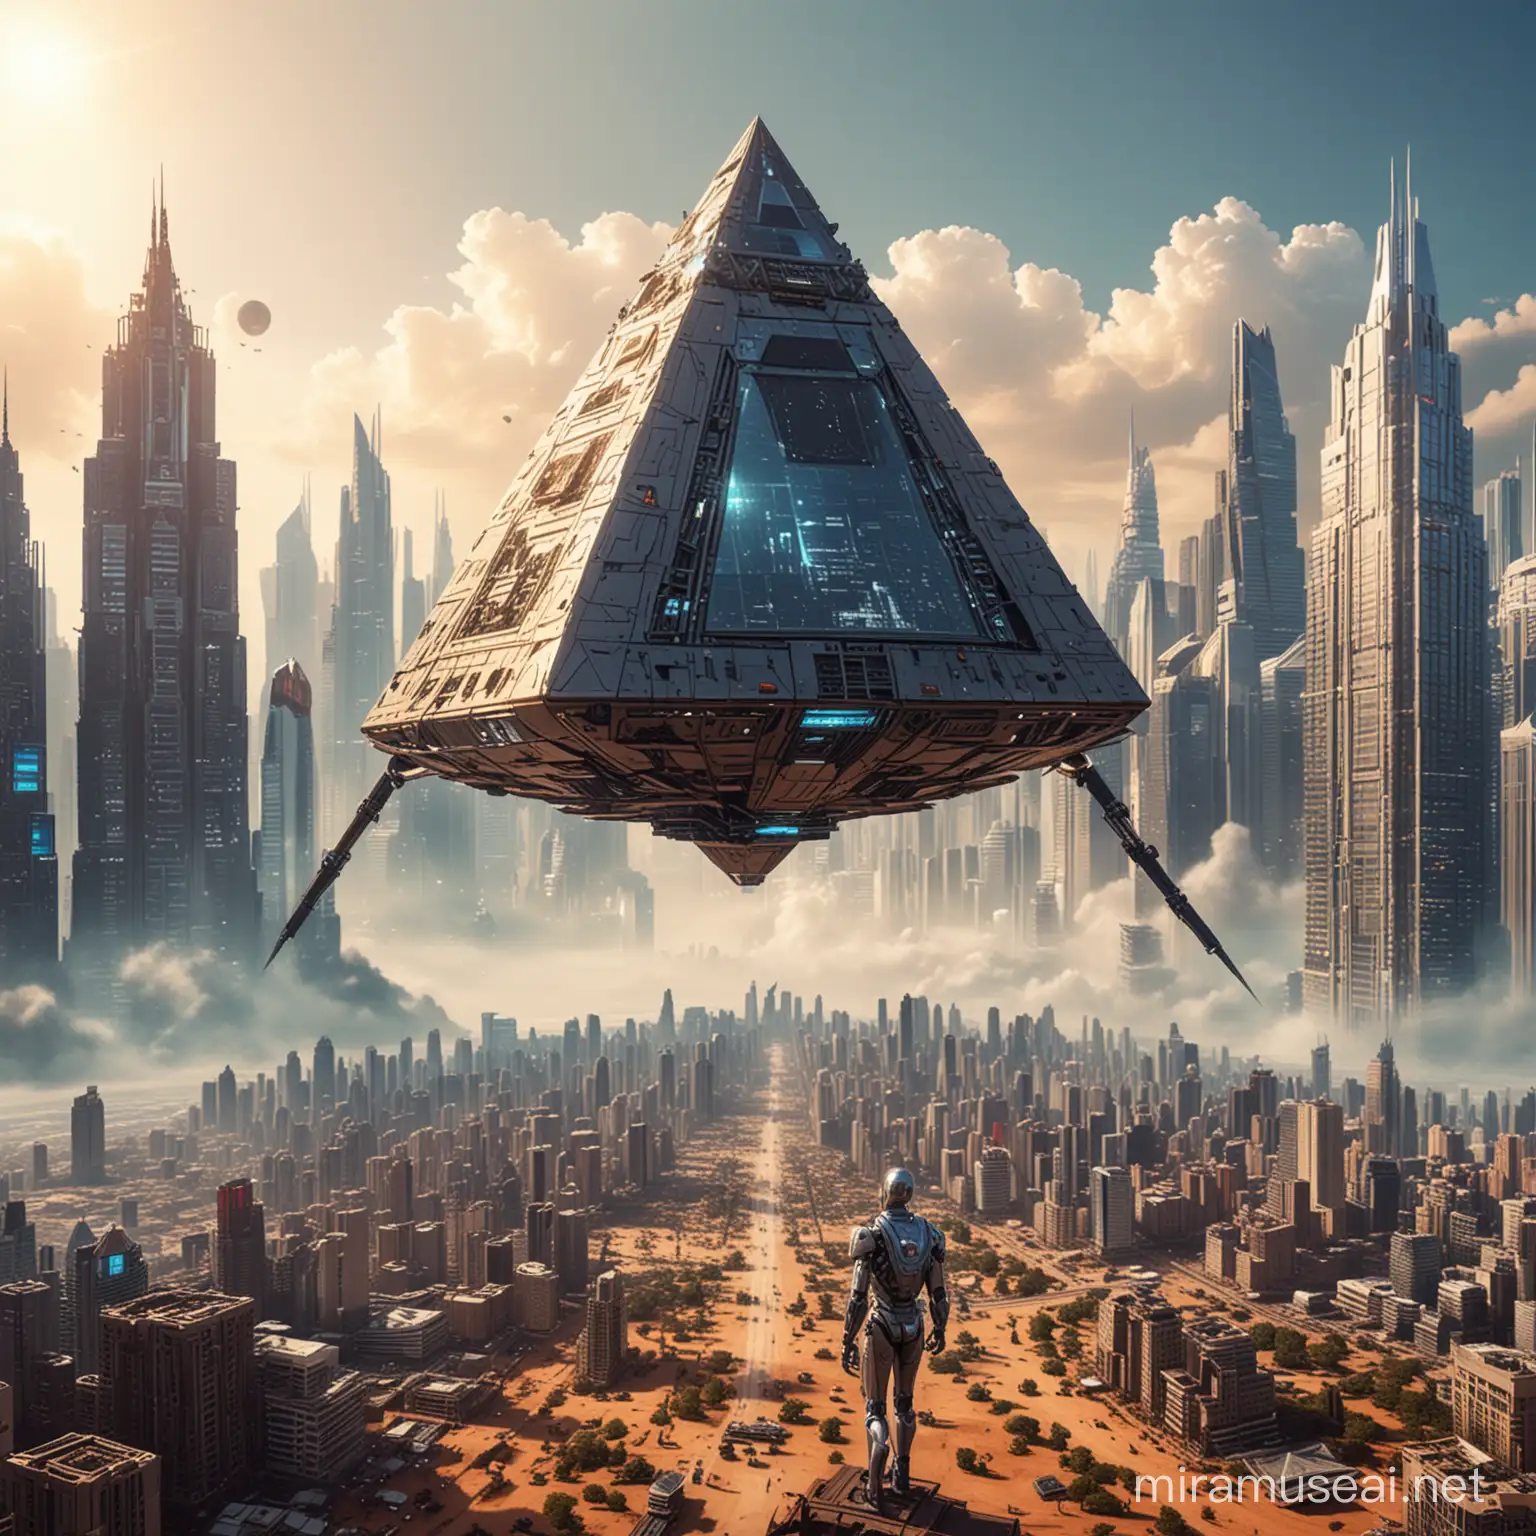 Futuristic Cityscape with Triangular Pyramid and Advanced Robots